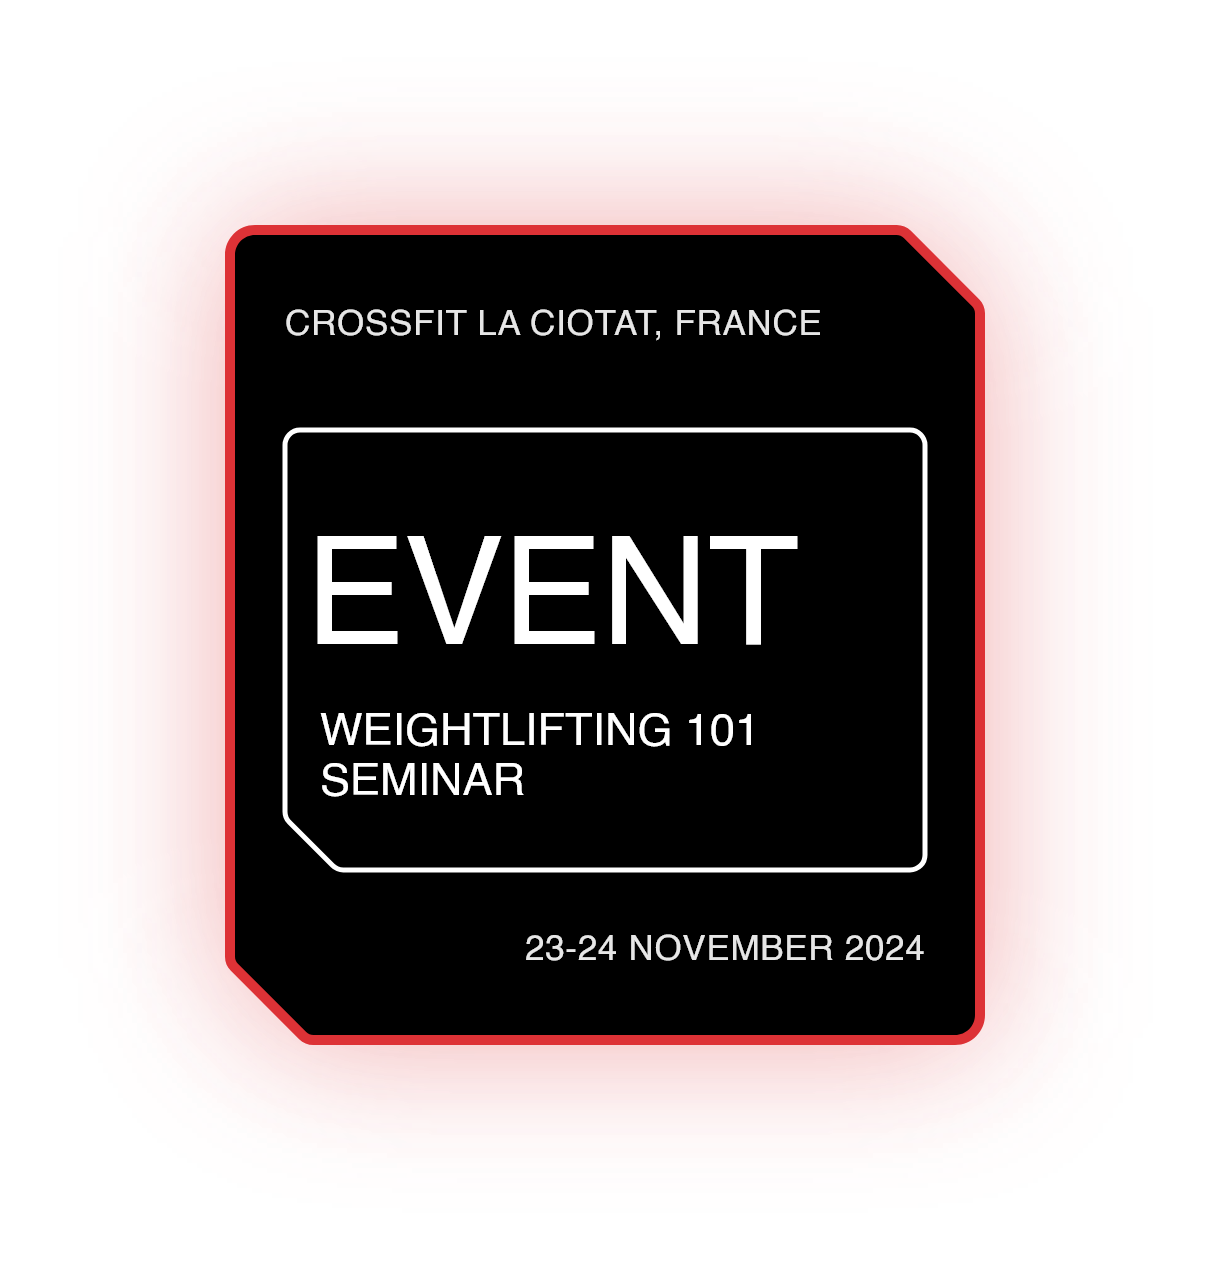 Weightlifting 101 Seminar - La Ciotat, France